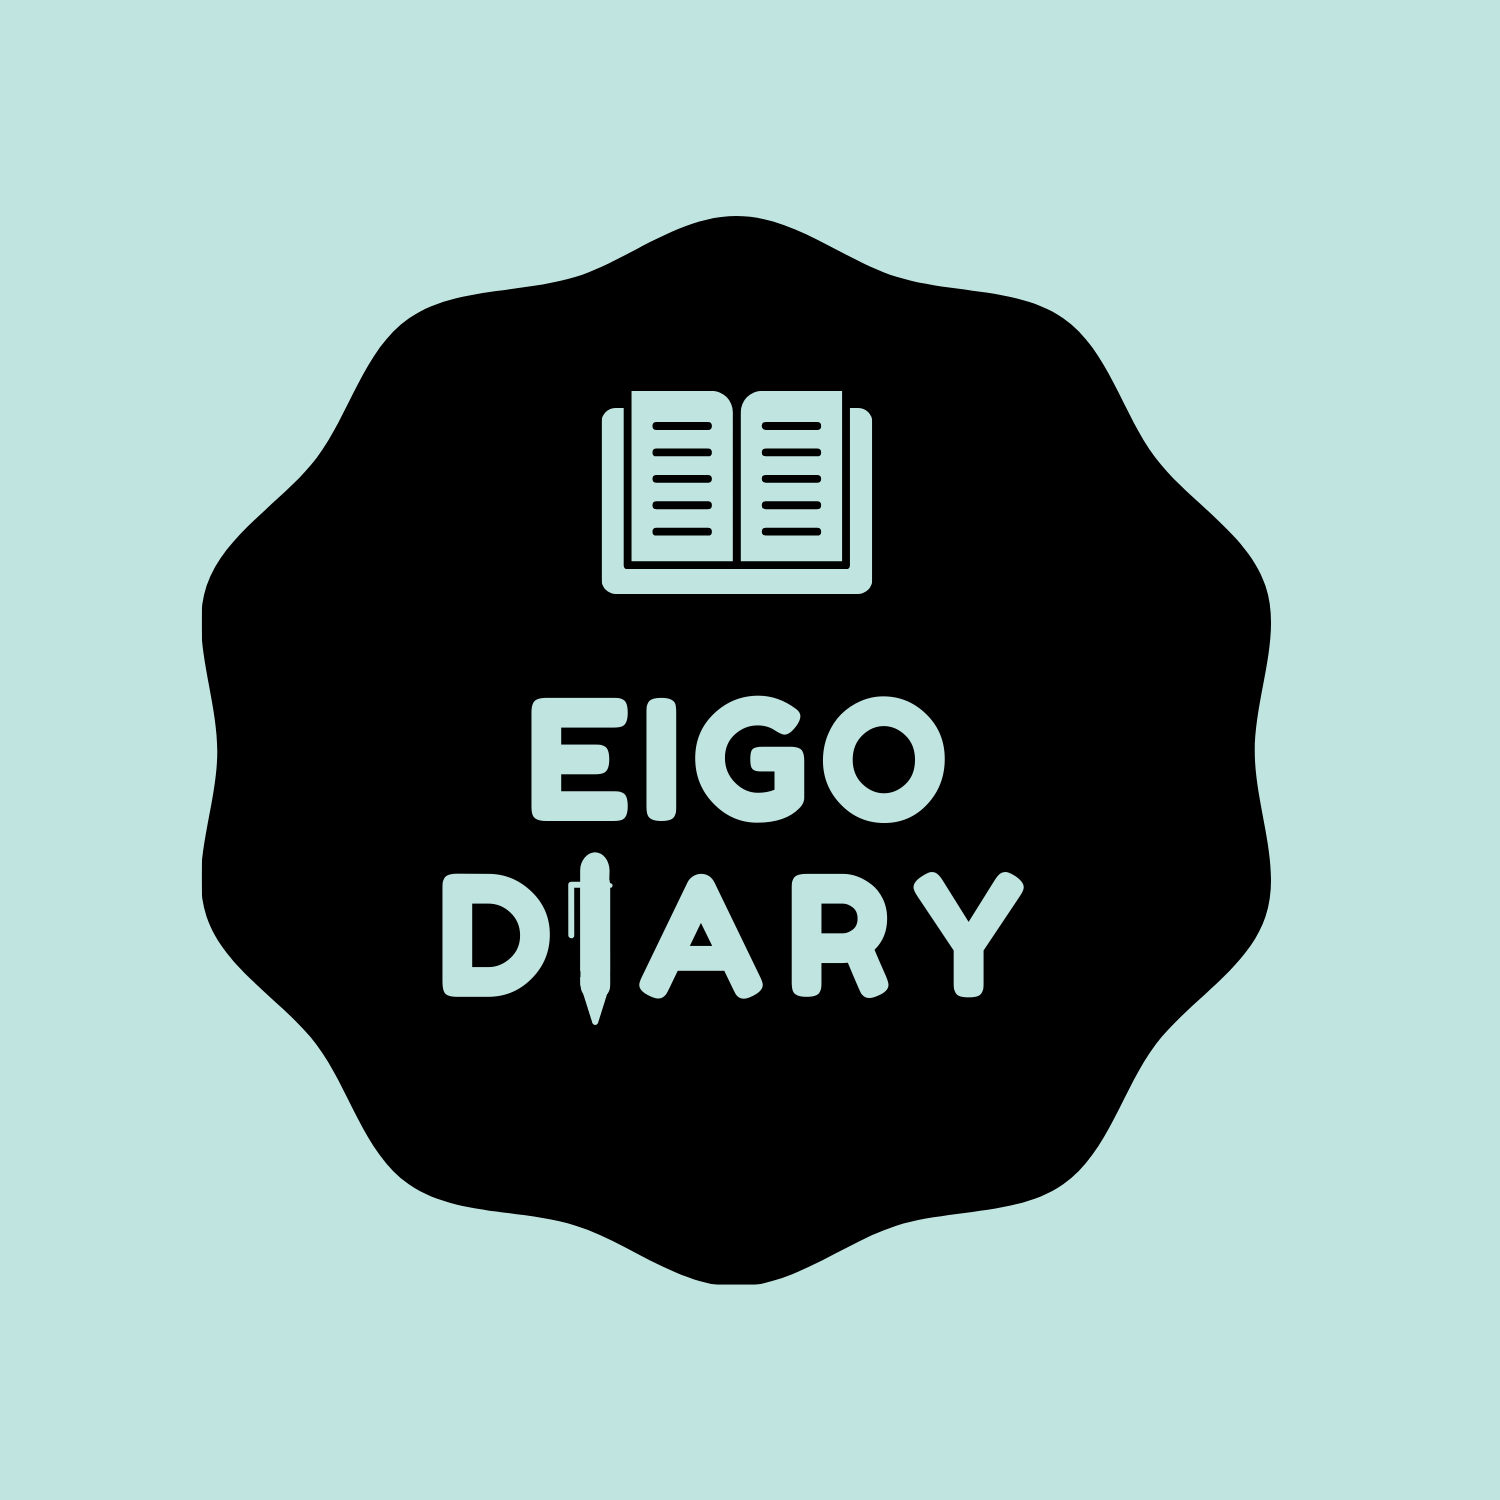 EIGO DIARY